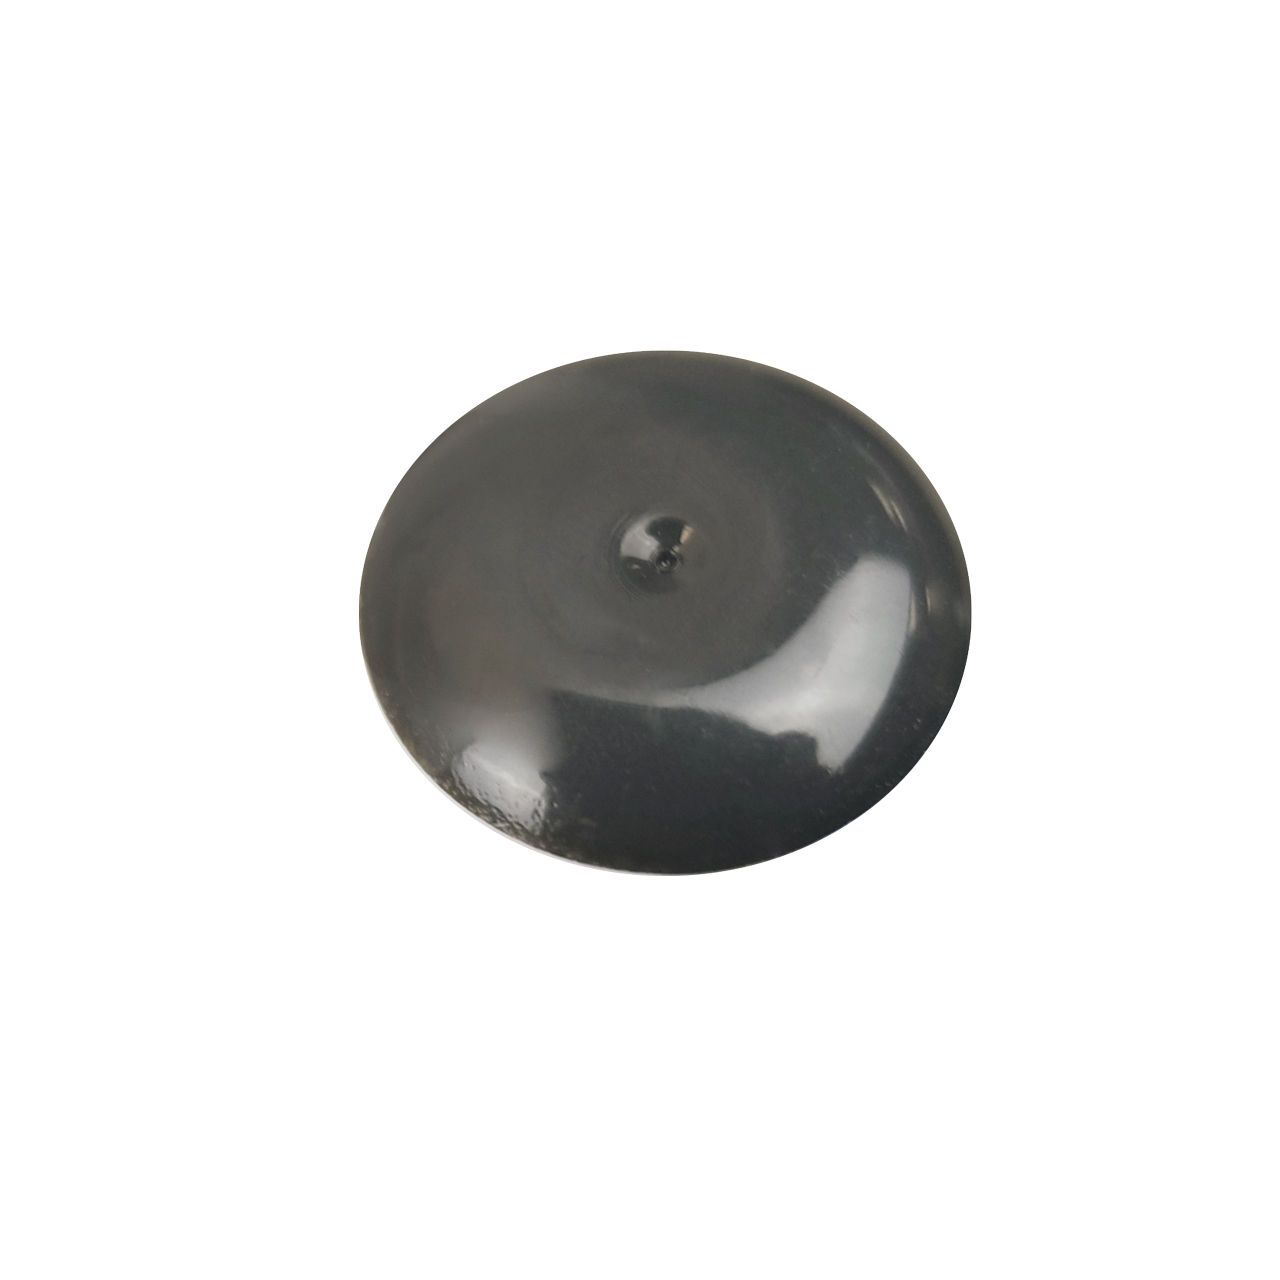 DupliColor RAL Acryl-Lack glänzend, anthrazitgrau (RAL 7016) / moosgrün (RAL6005) 12ml, Pinseldose